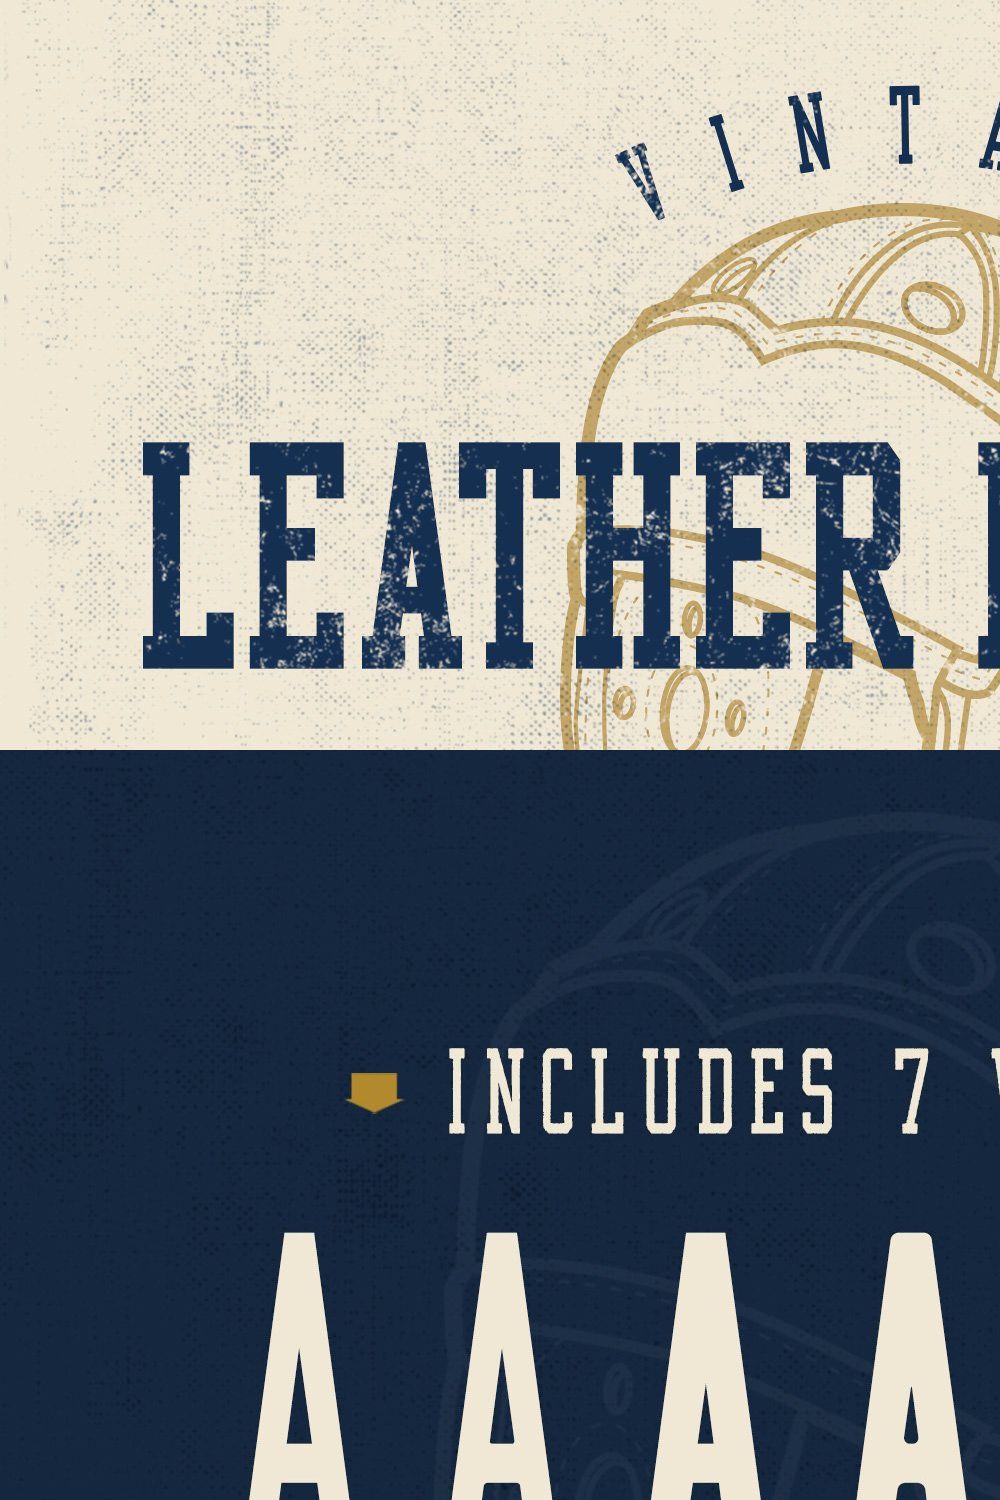 Leather Helmet Athletic Font pinterest preview image.